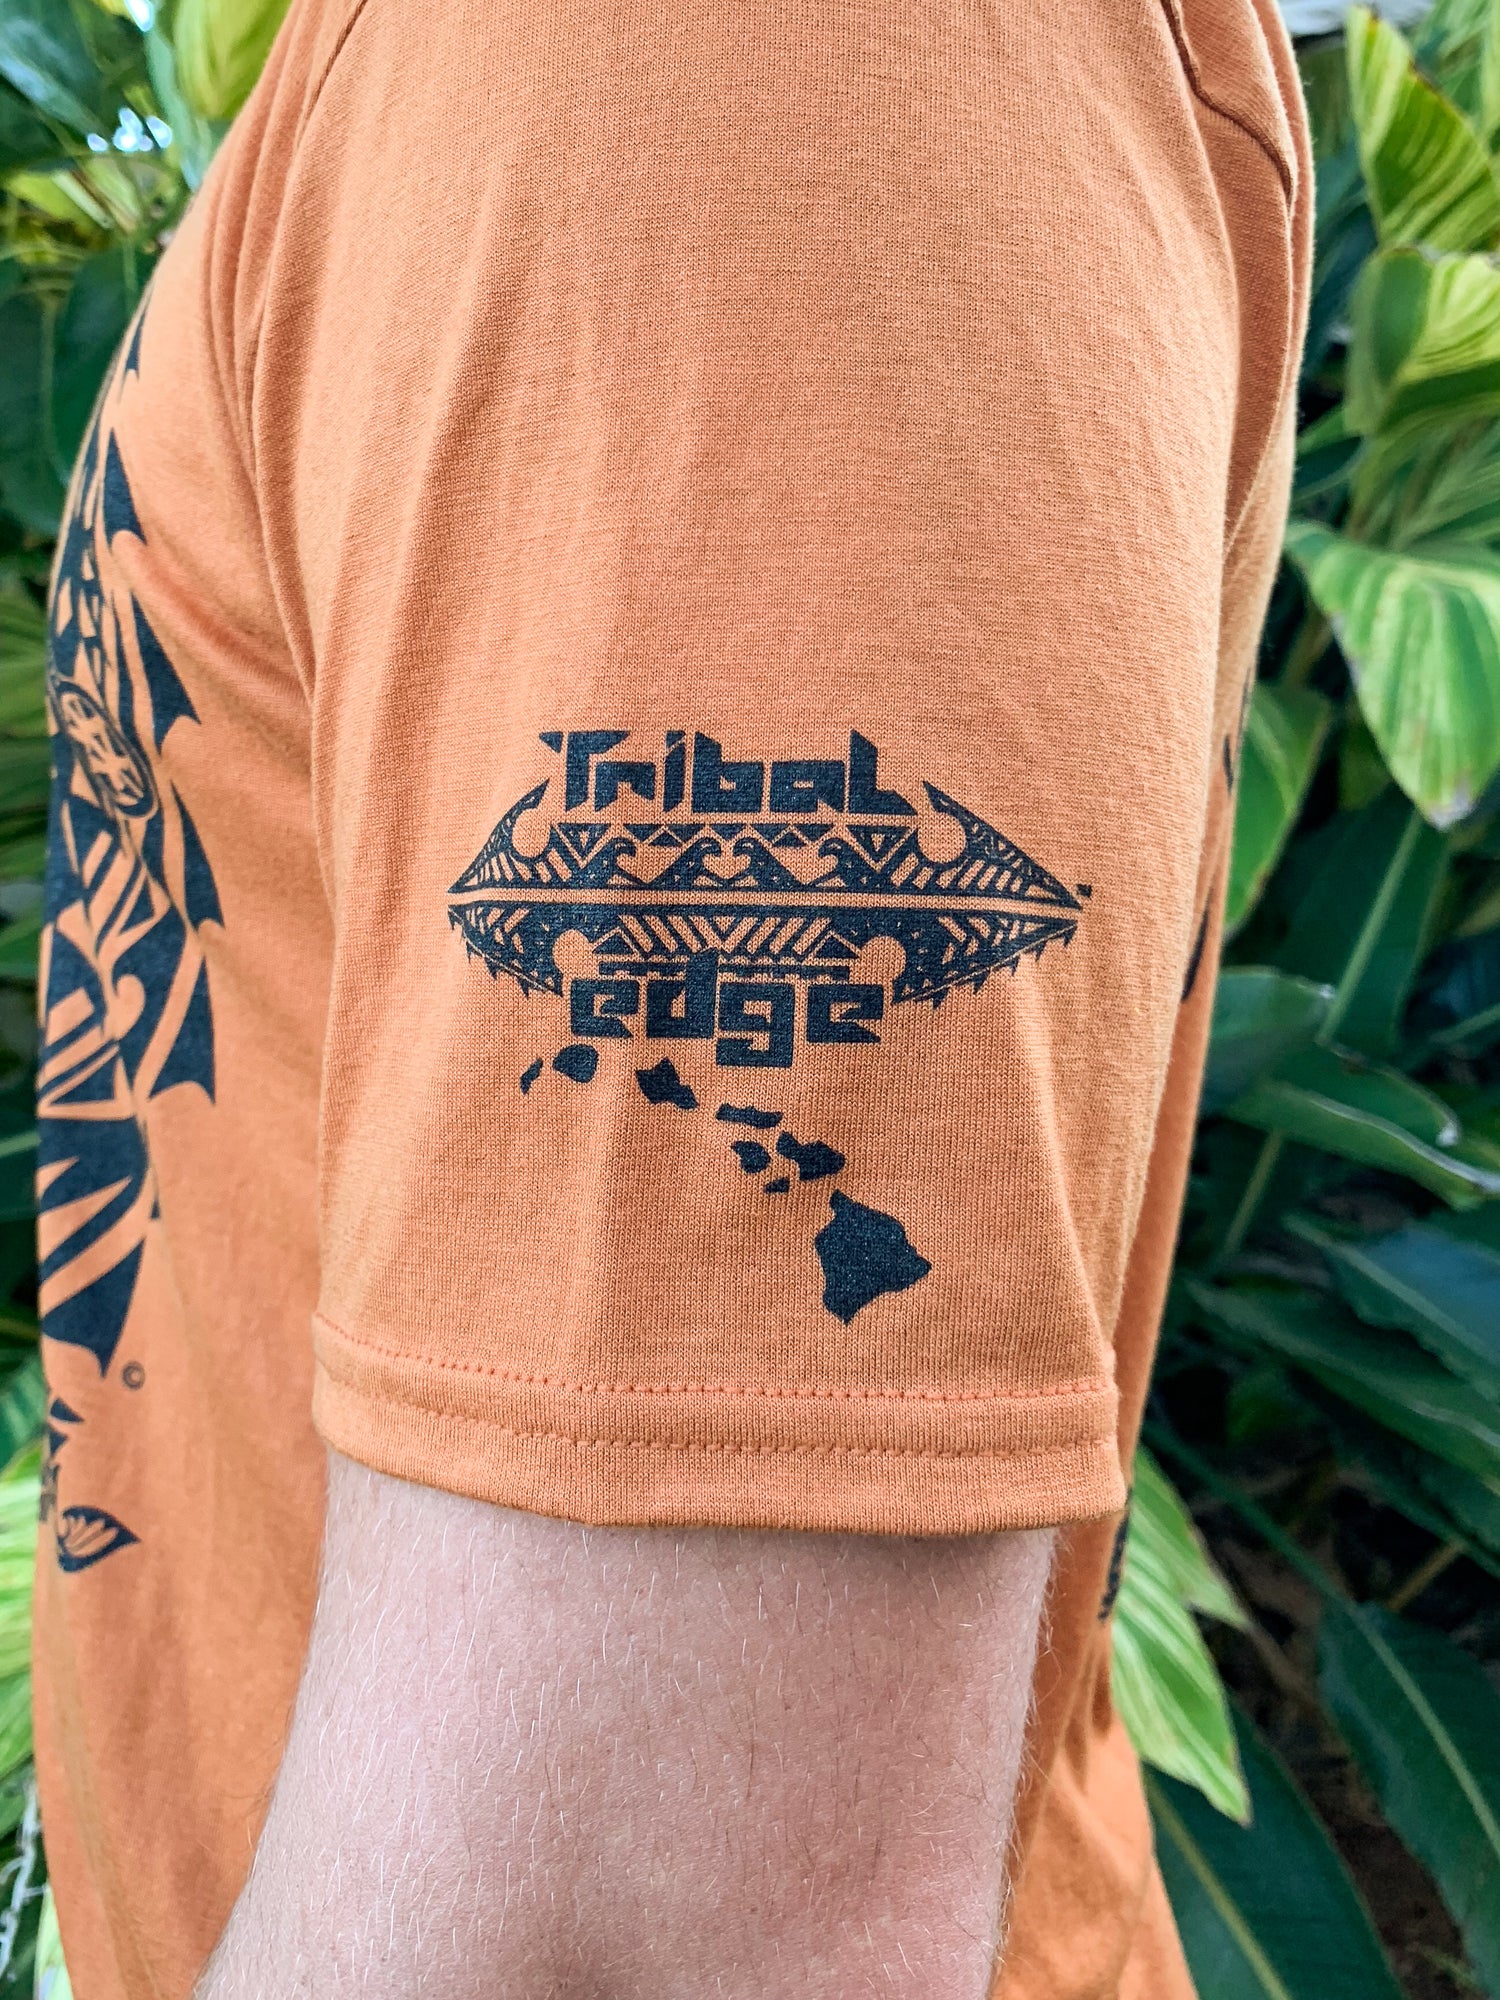 Men's T-Shirt - Standup Paddle-boarder - Texas Orange - Tribal Edge Clothing